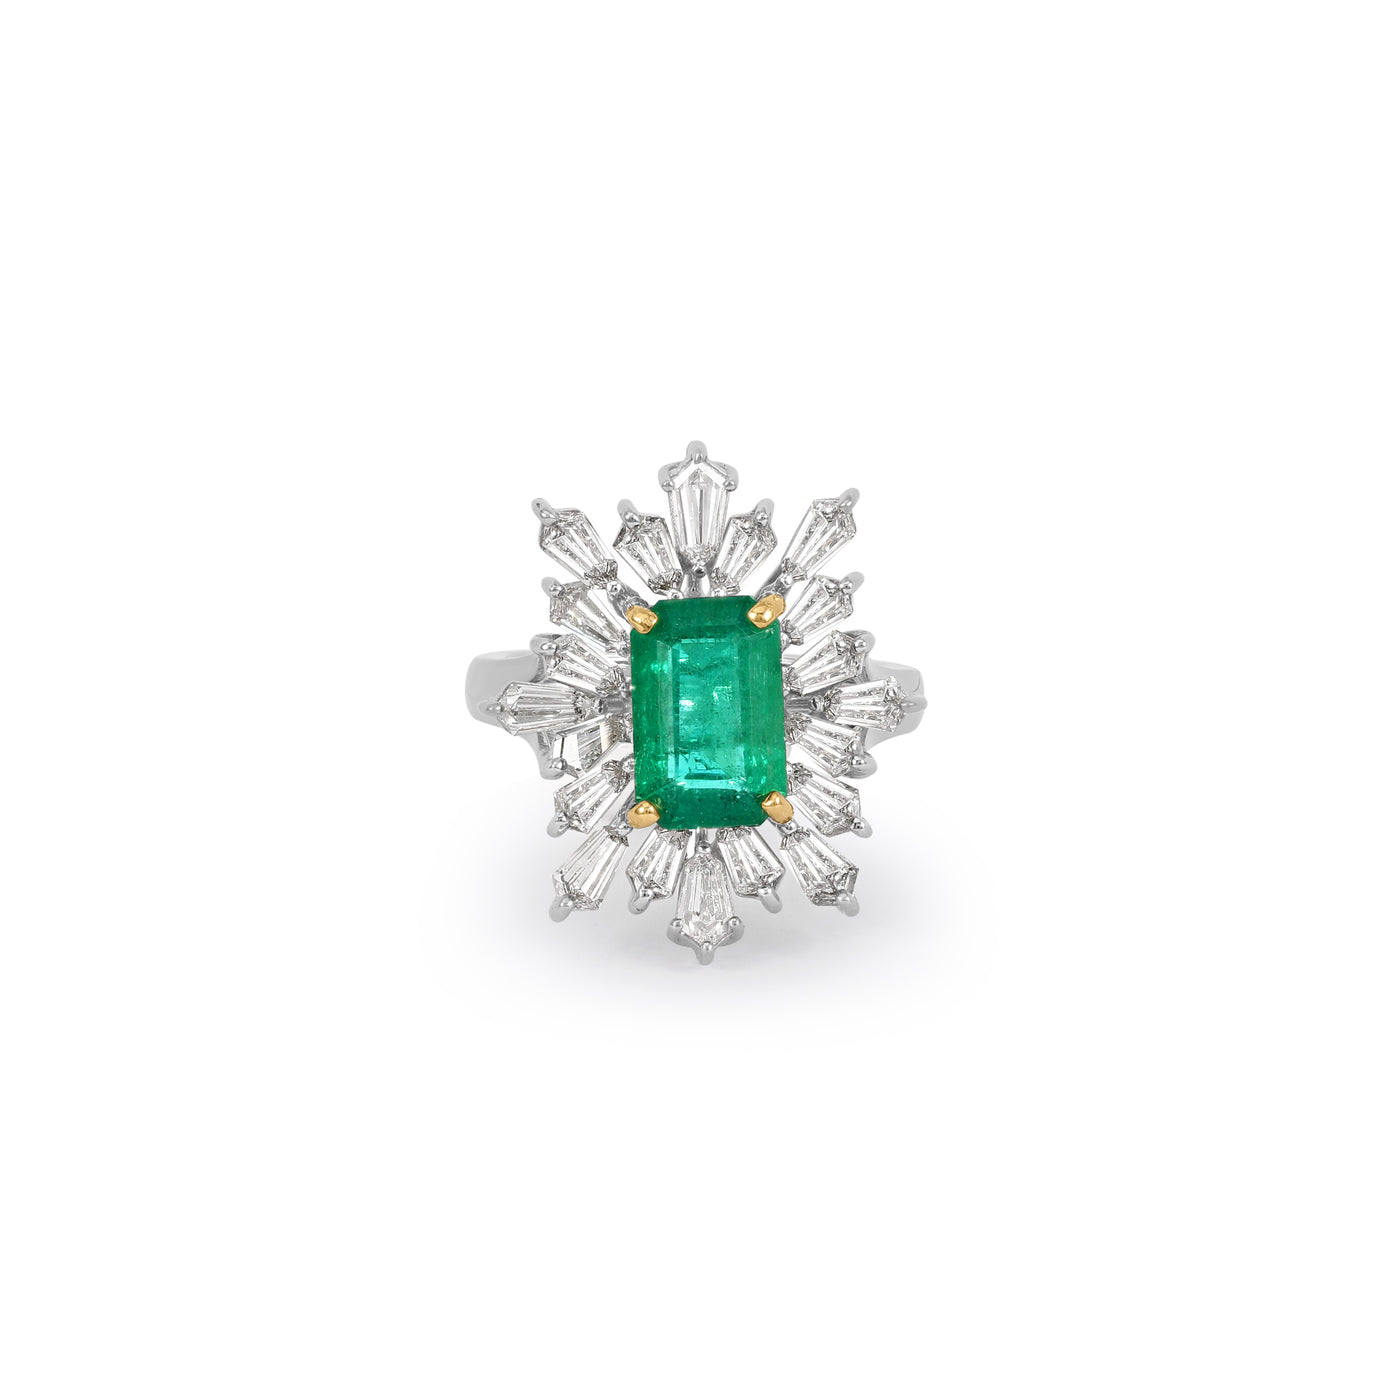 White Gold Diamond Emerald Ring, by Soit Belle